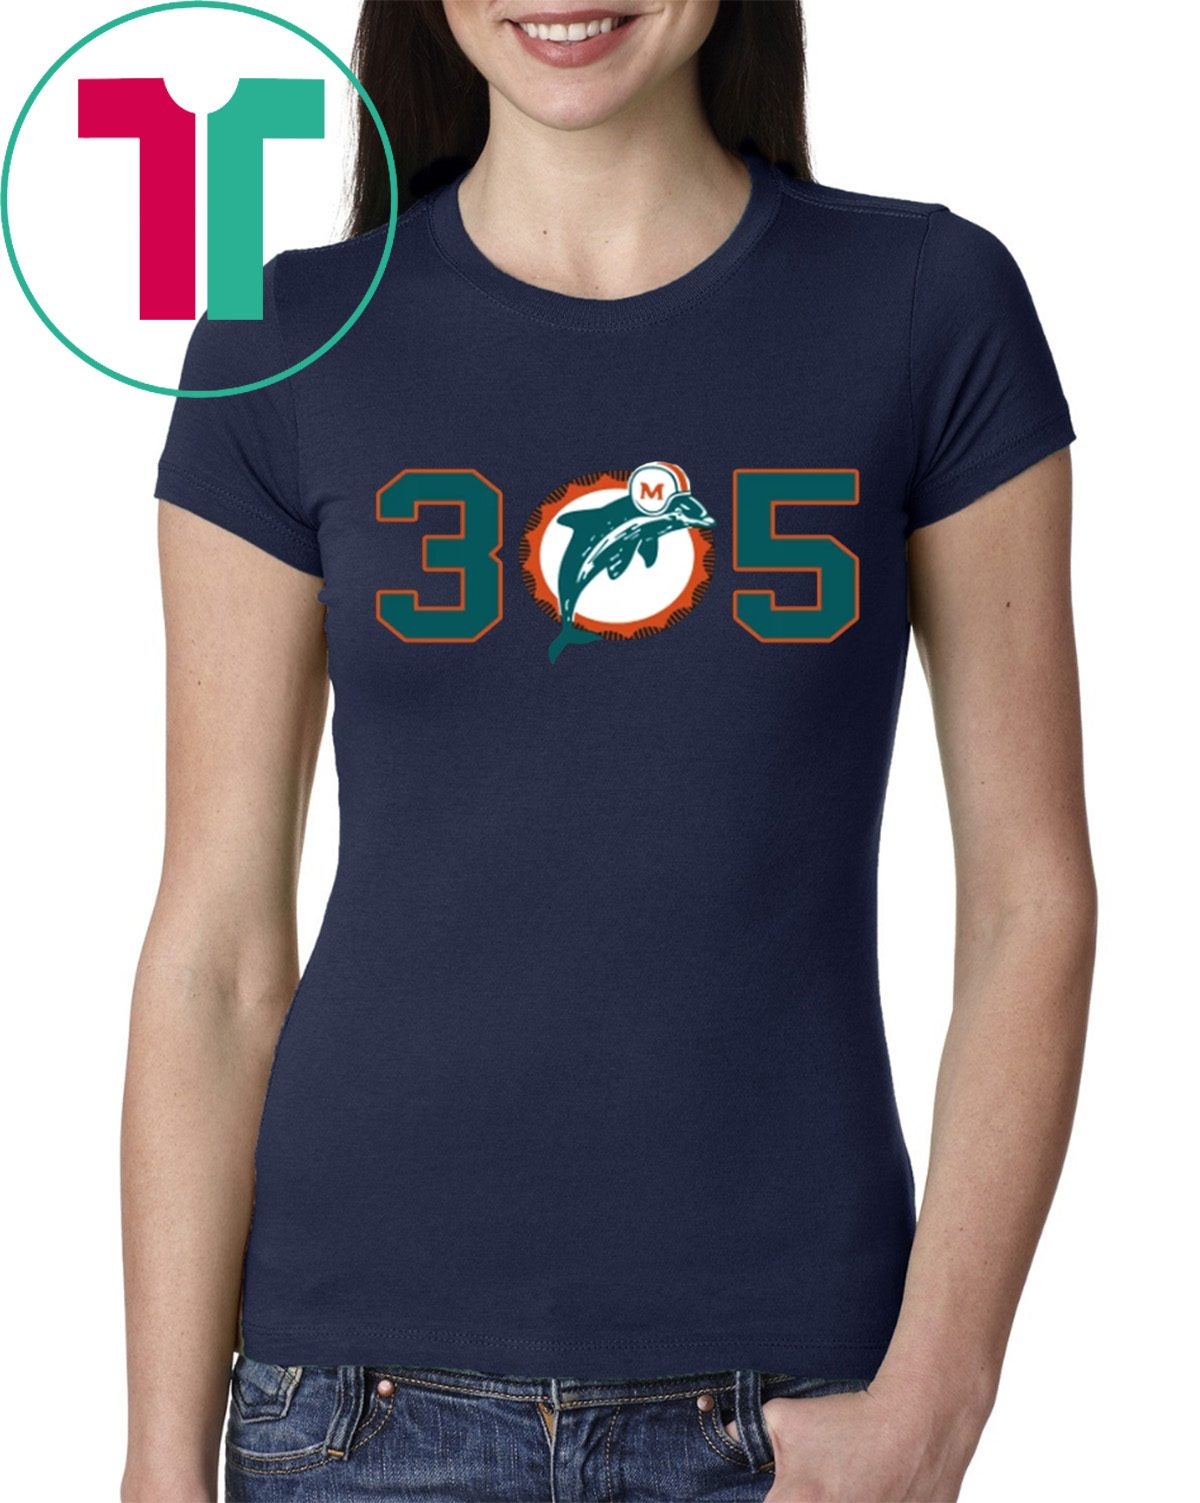 305 Miami Dolphins Shirt - Reviewshirts Office